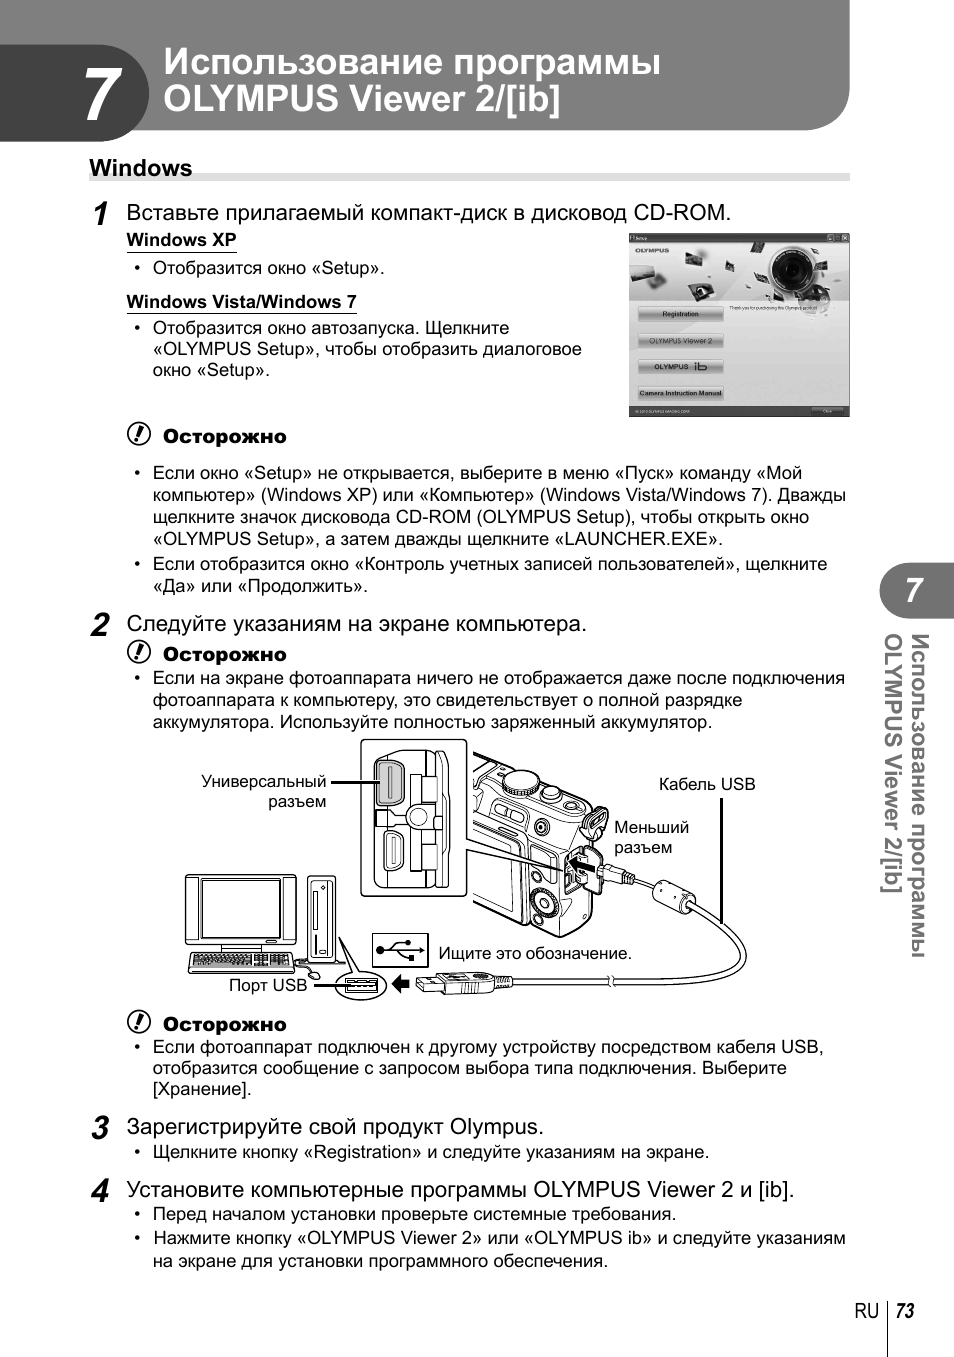 olympus viewer 3 manual pdf